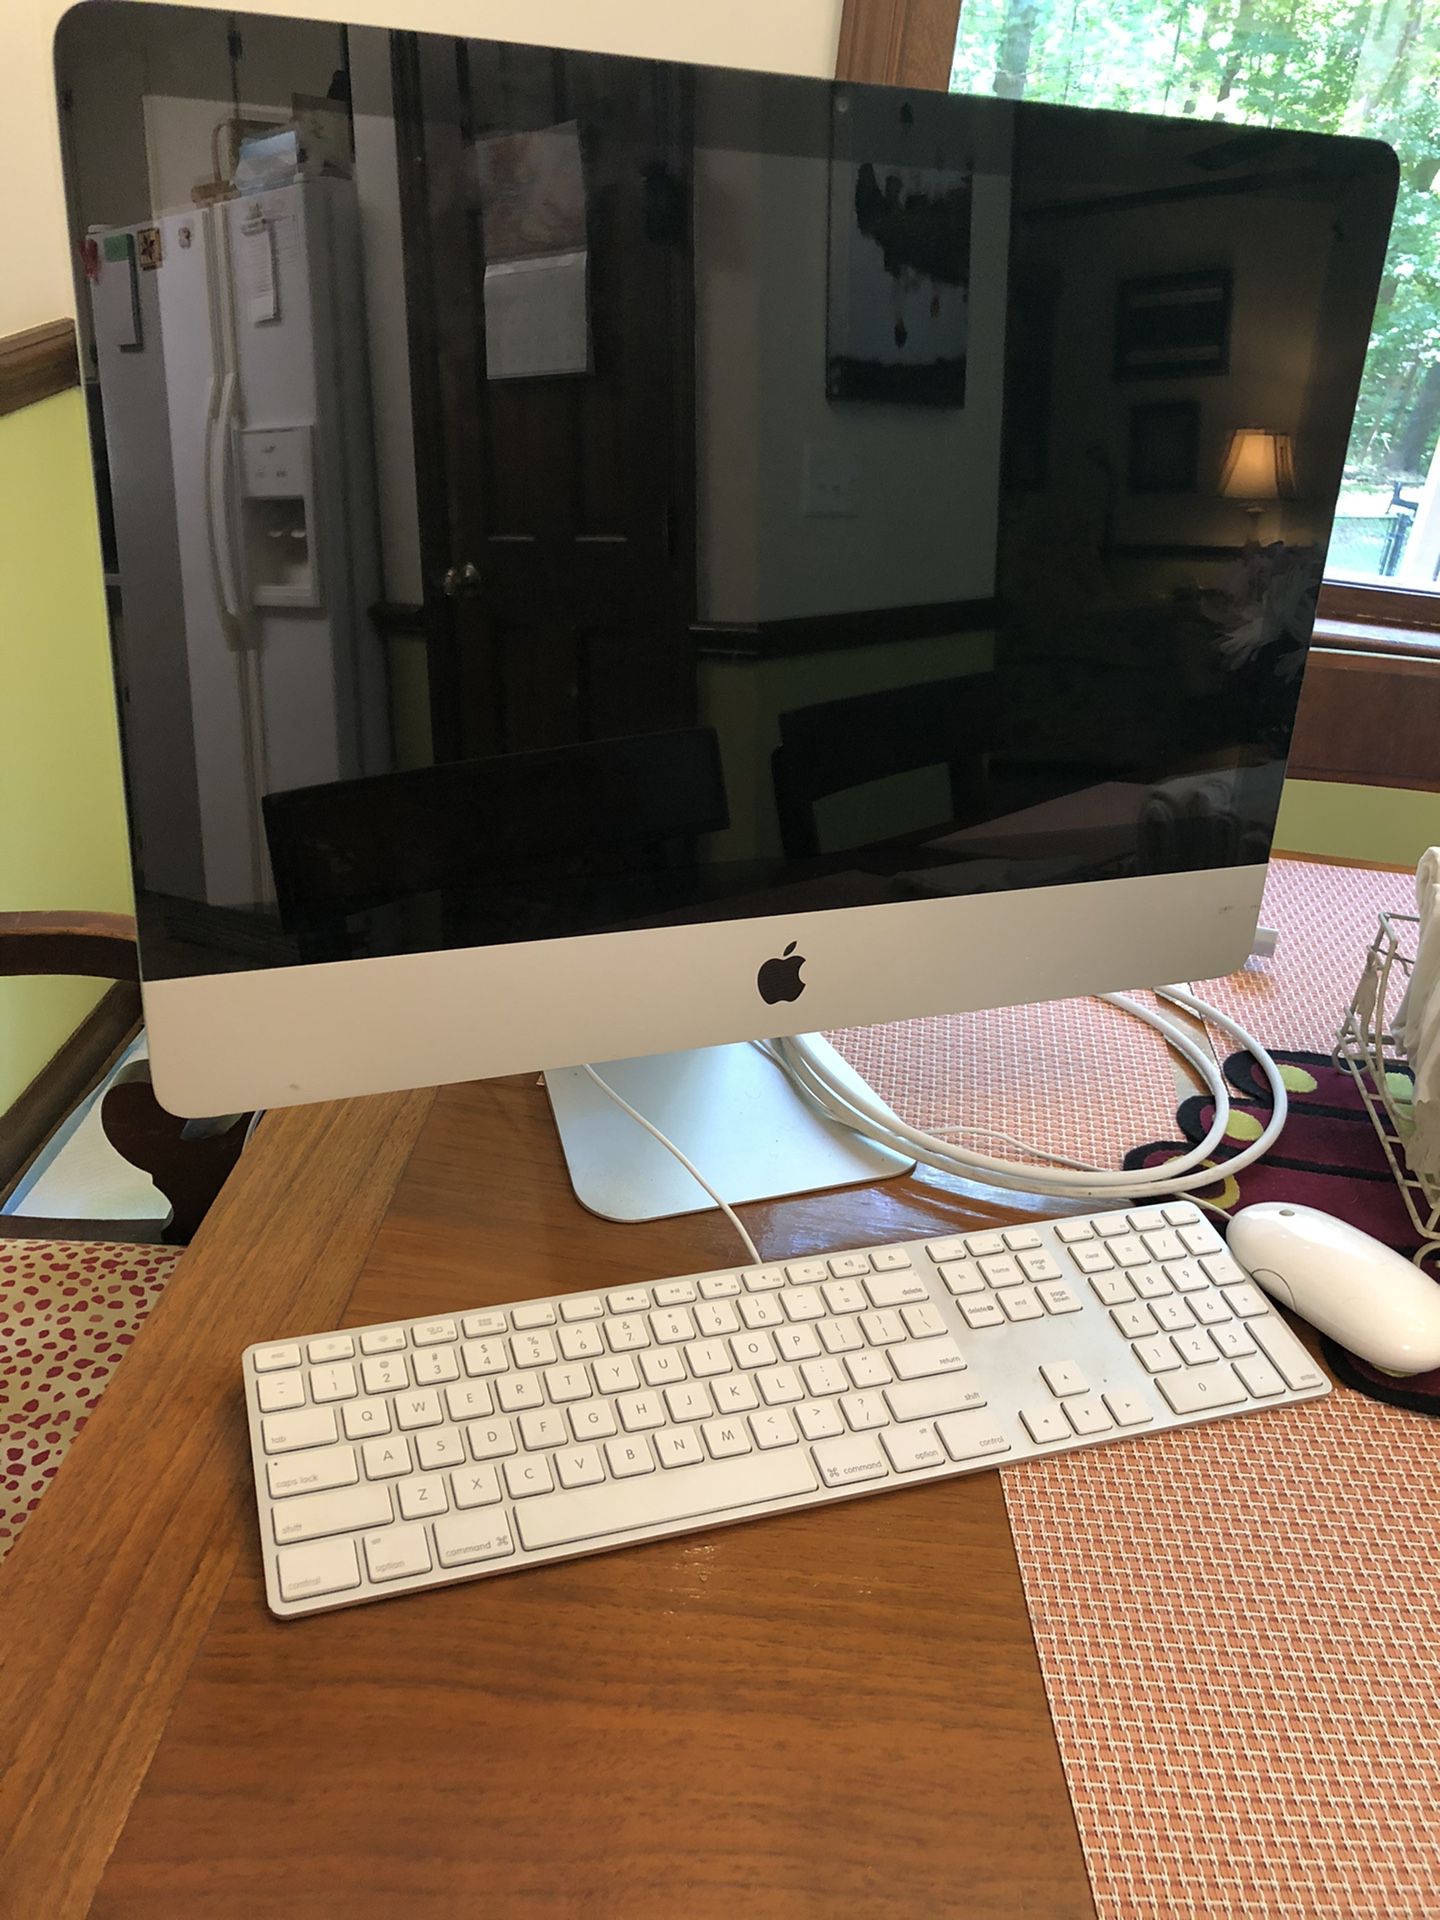 Apple iMac 21” 2009 with upgraded RAM 8 gig